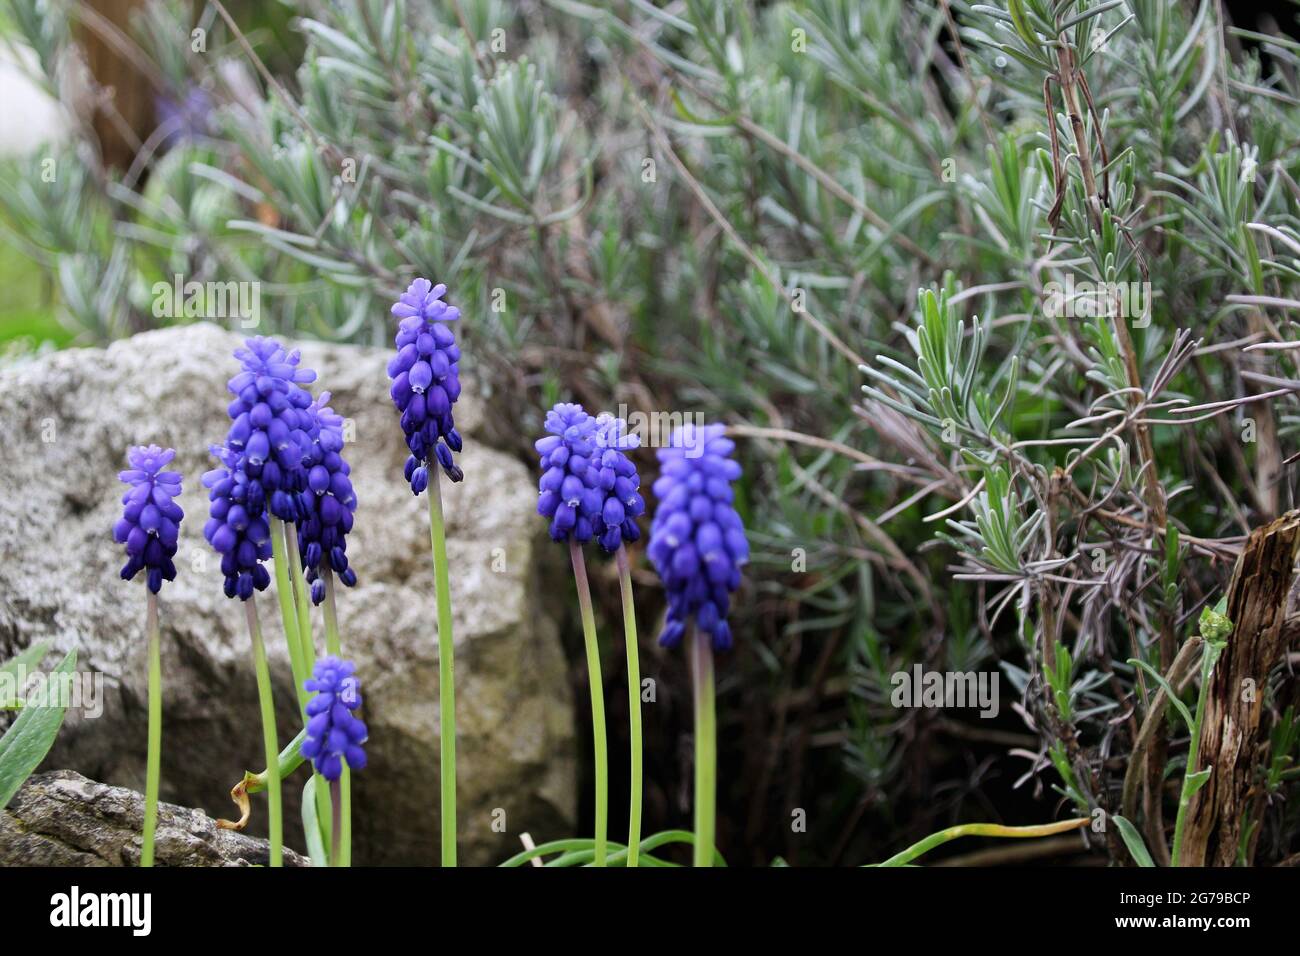 Broad-leaved grape hyacinths (Muscari latifolium) in front of lavender, lavender shrub Stock Photo